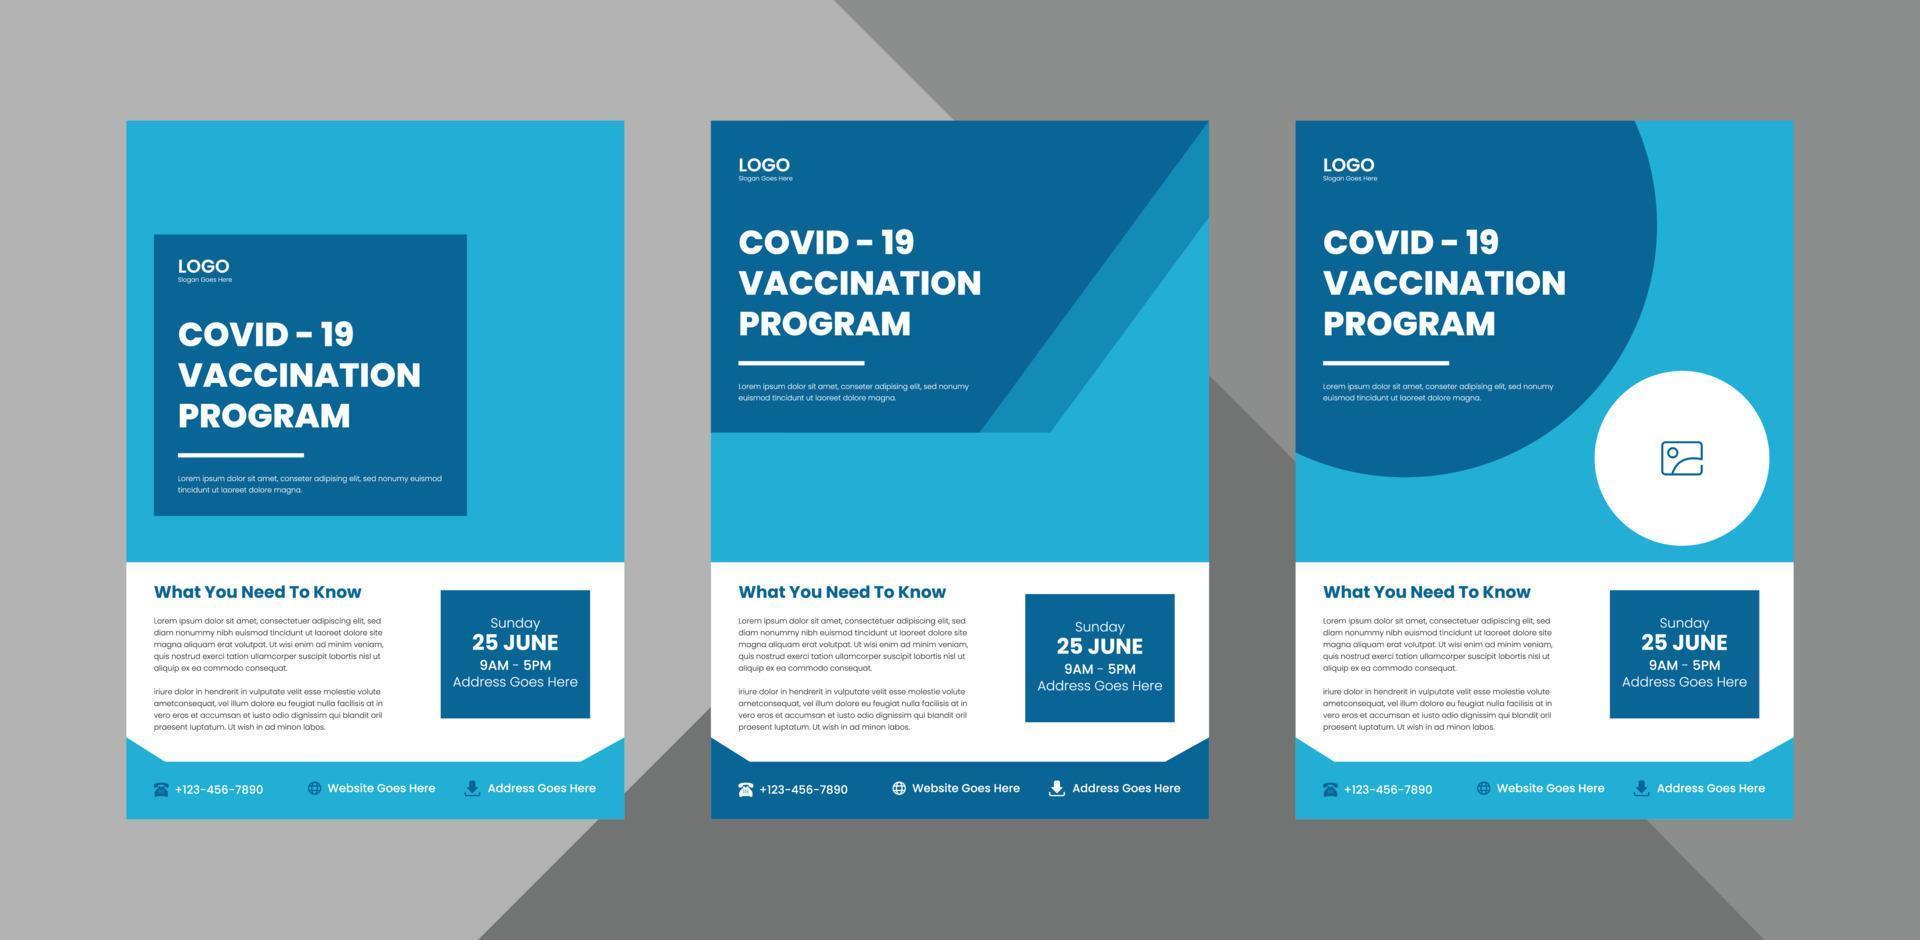 Covid-19-Impfprogramm Flyer Design-Vorlagenpaket. Broschüre zum Coronavirus-Impfplakat 3 in 1 Design. Bundle, 3 in 1, A4-Vorlage, Broschürendesign, Cover, Flyer, Poster, druckfertig vektor